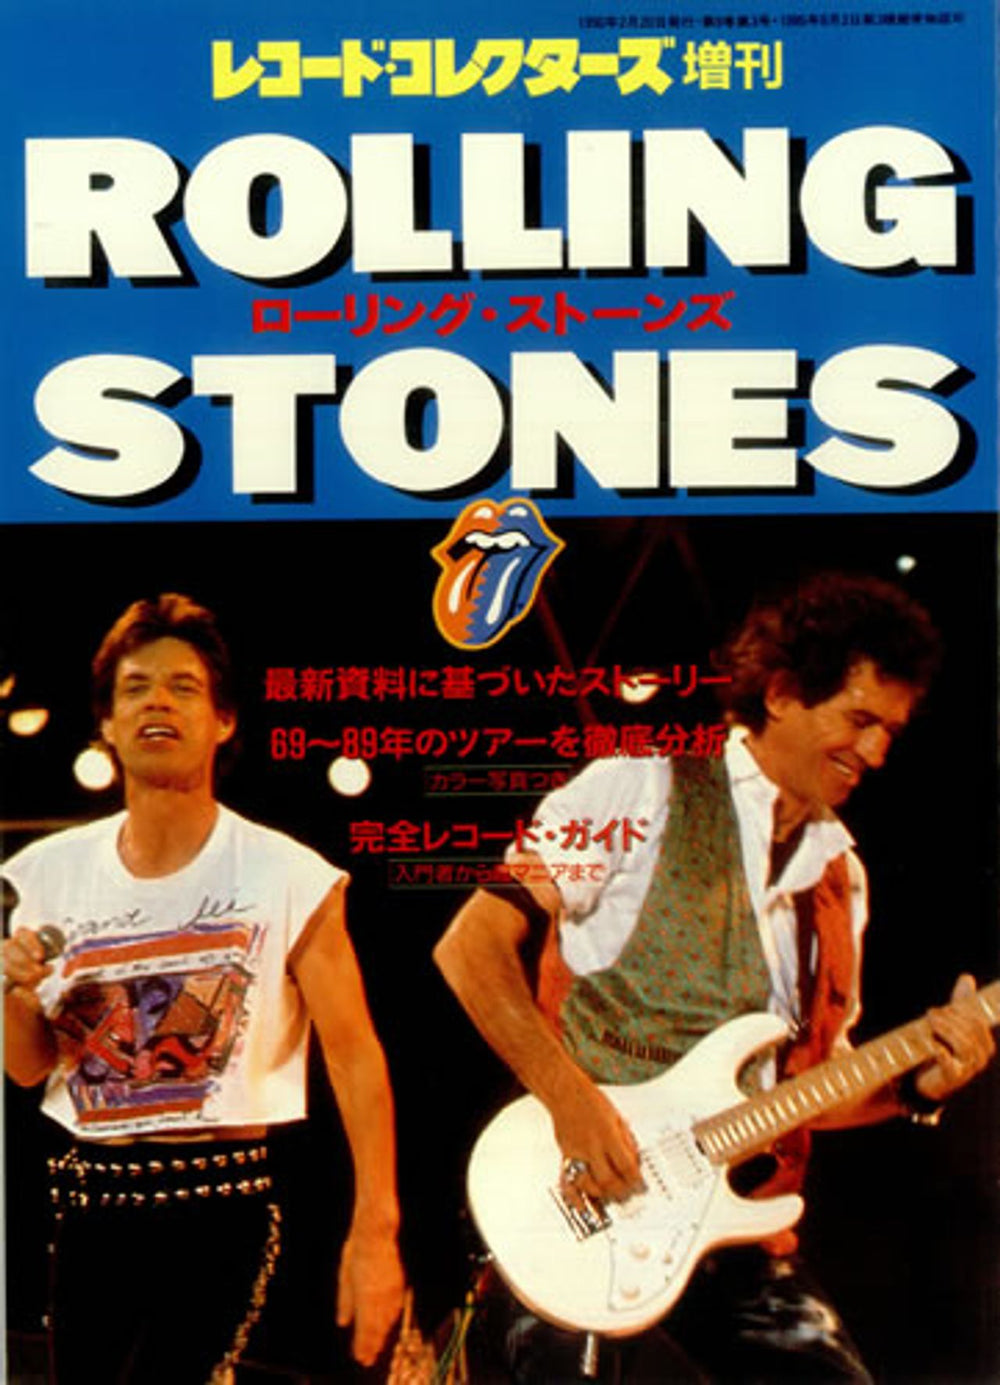 The Rolling Stones Welcome Rolling Stones - Steel Wheels Japan 